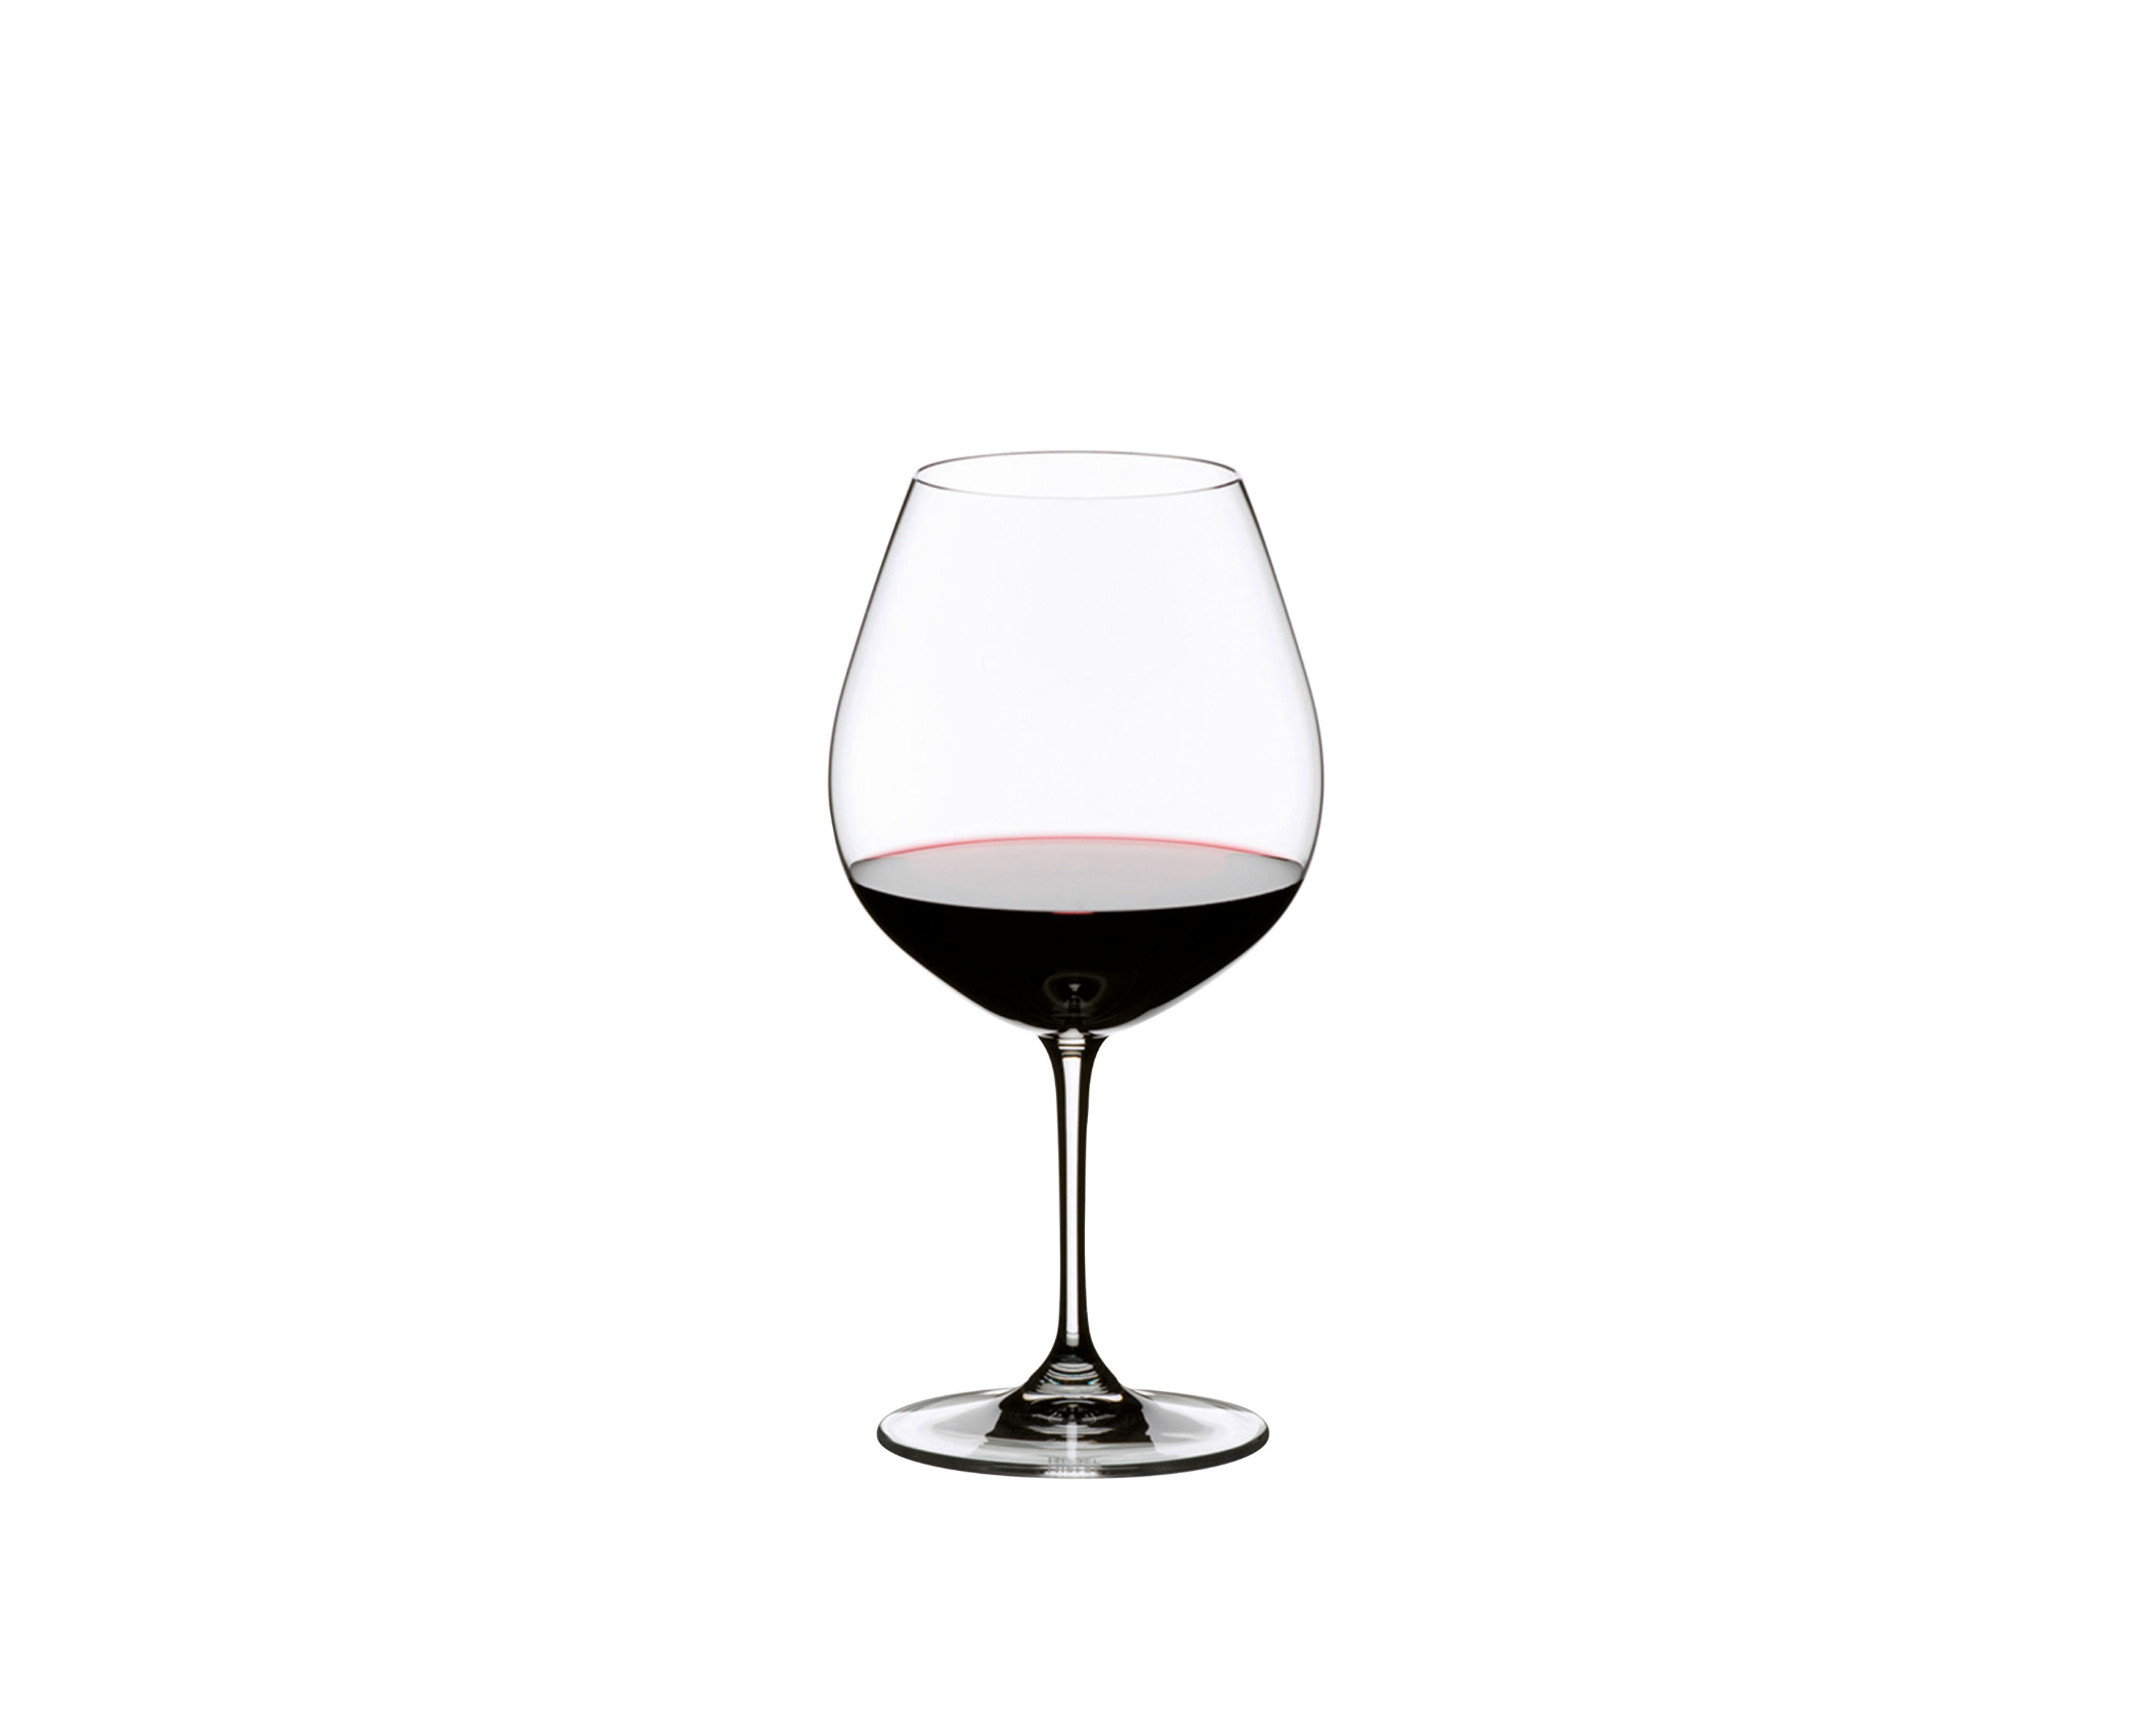 Riedel Vinum Pinot Noir